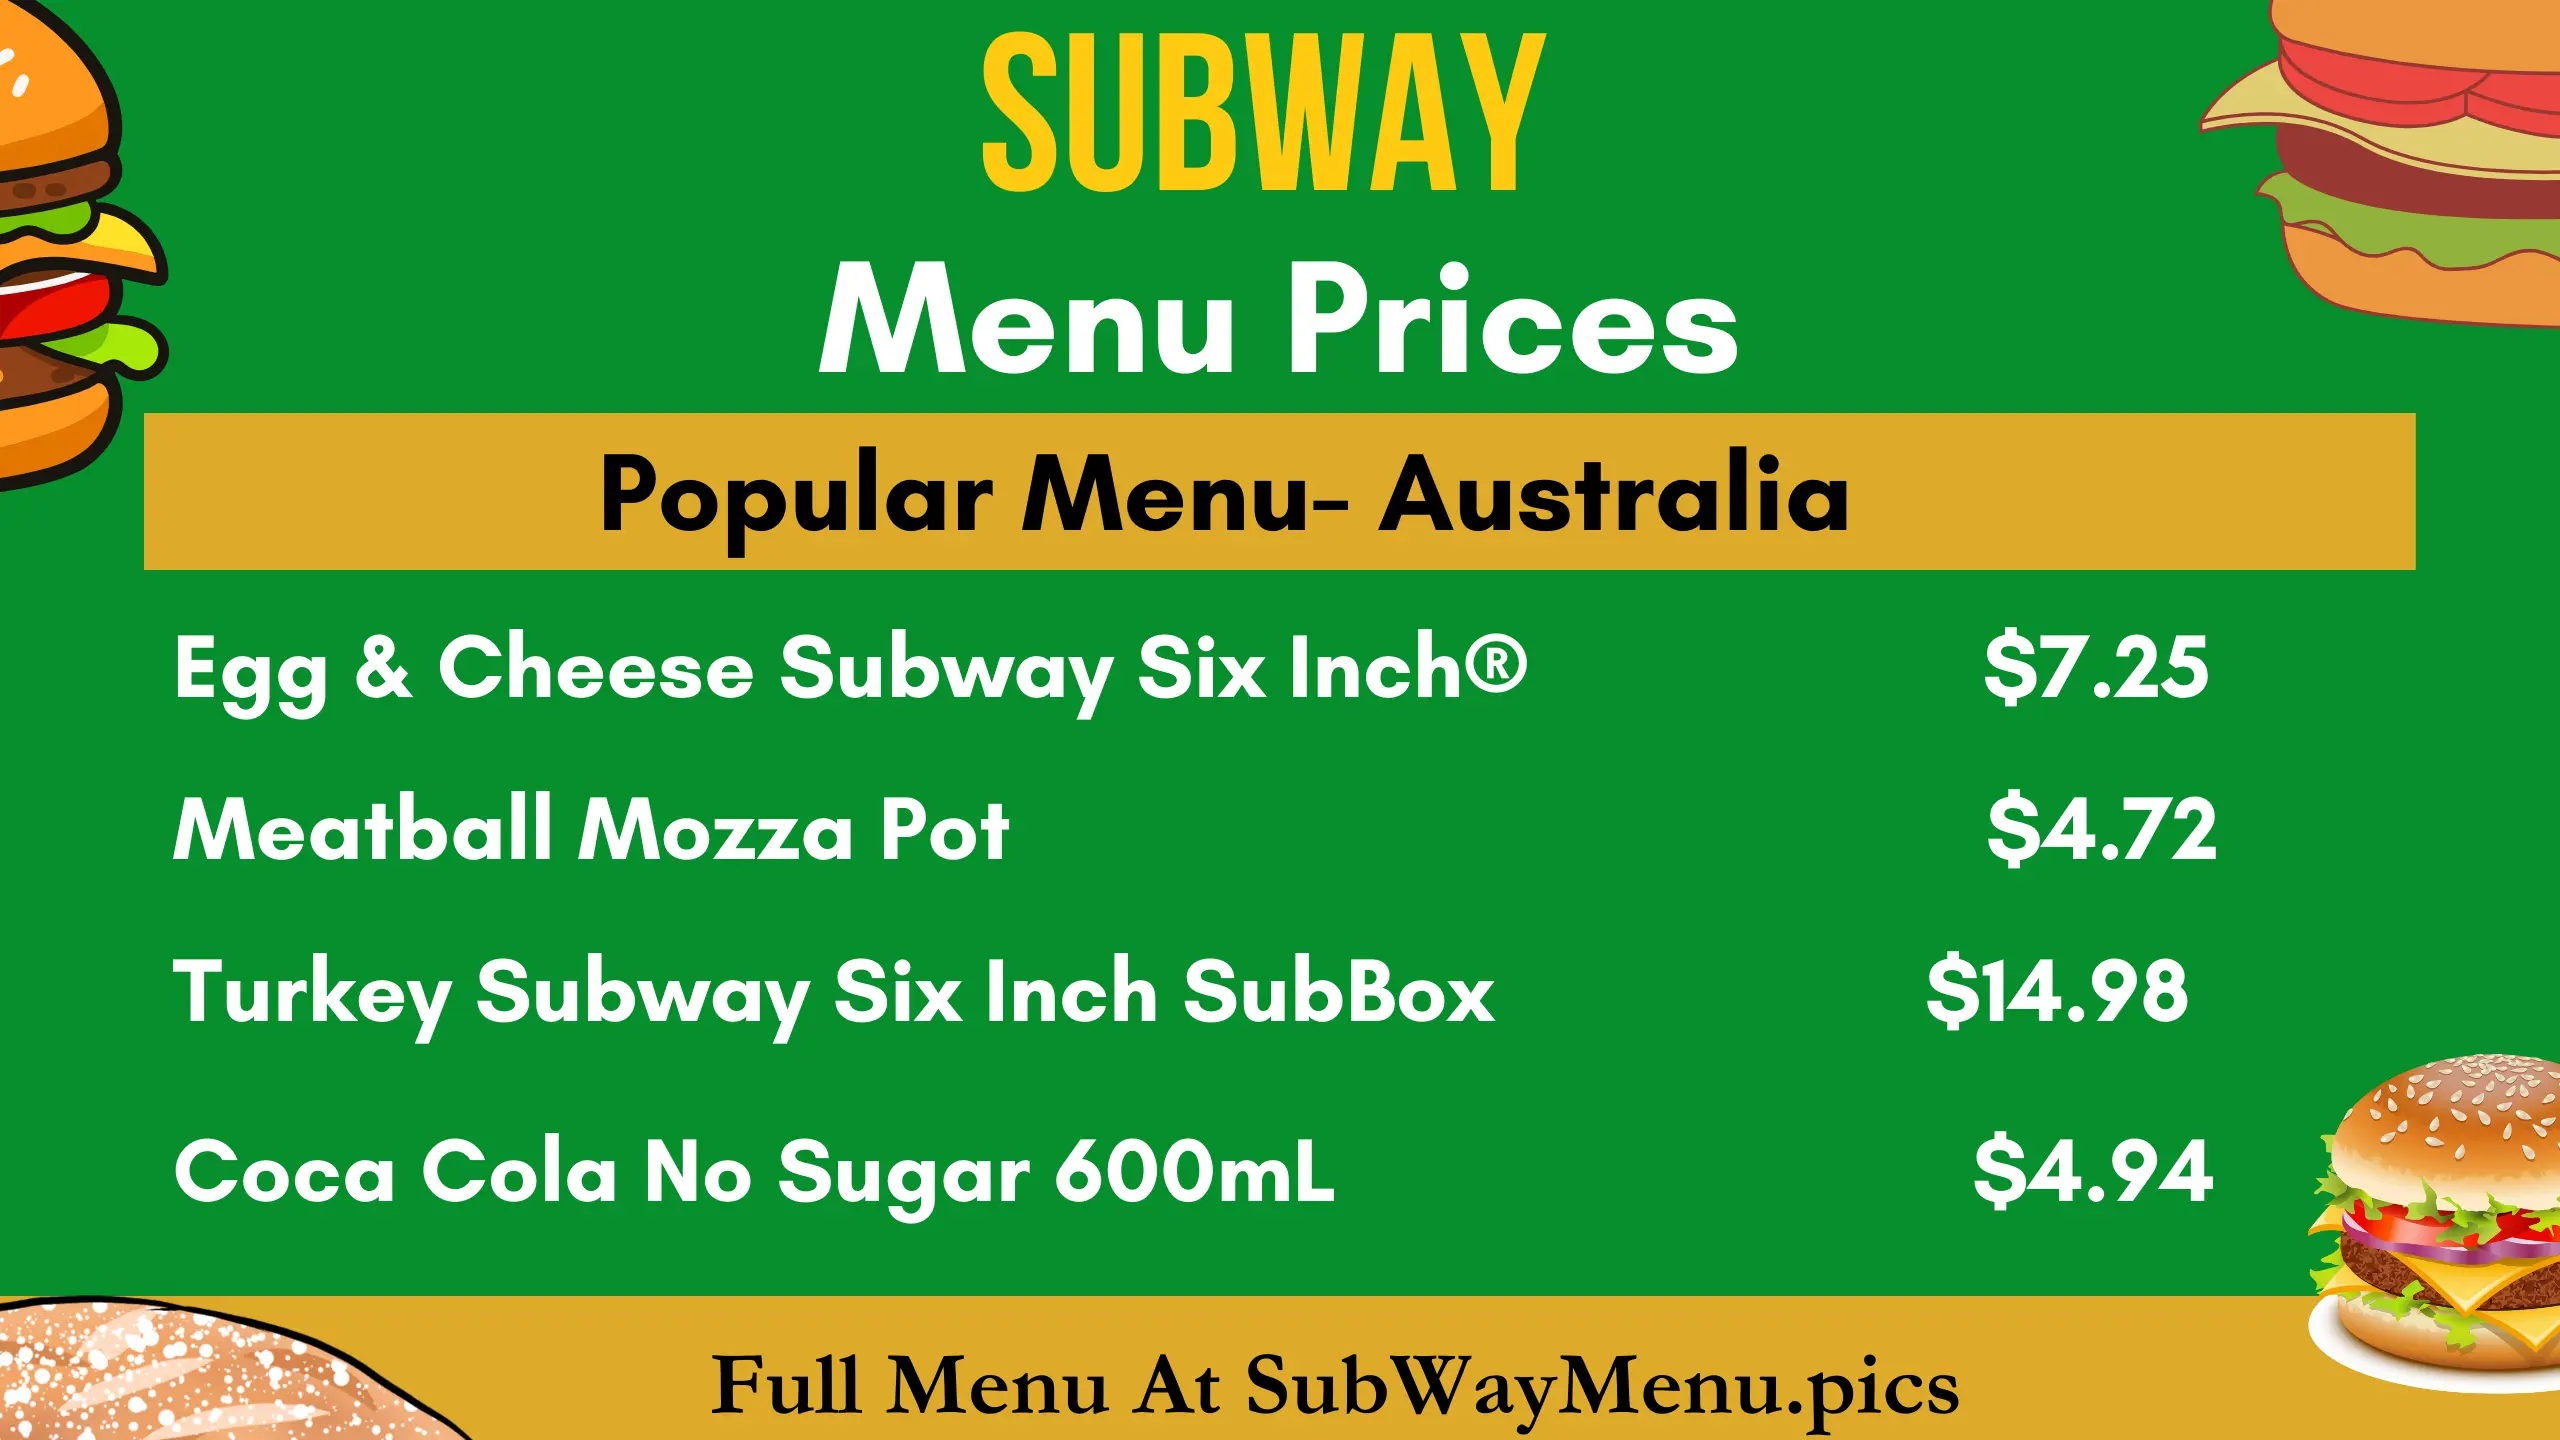 Subway Menu Prices Australia